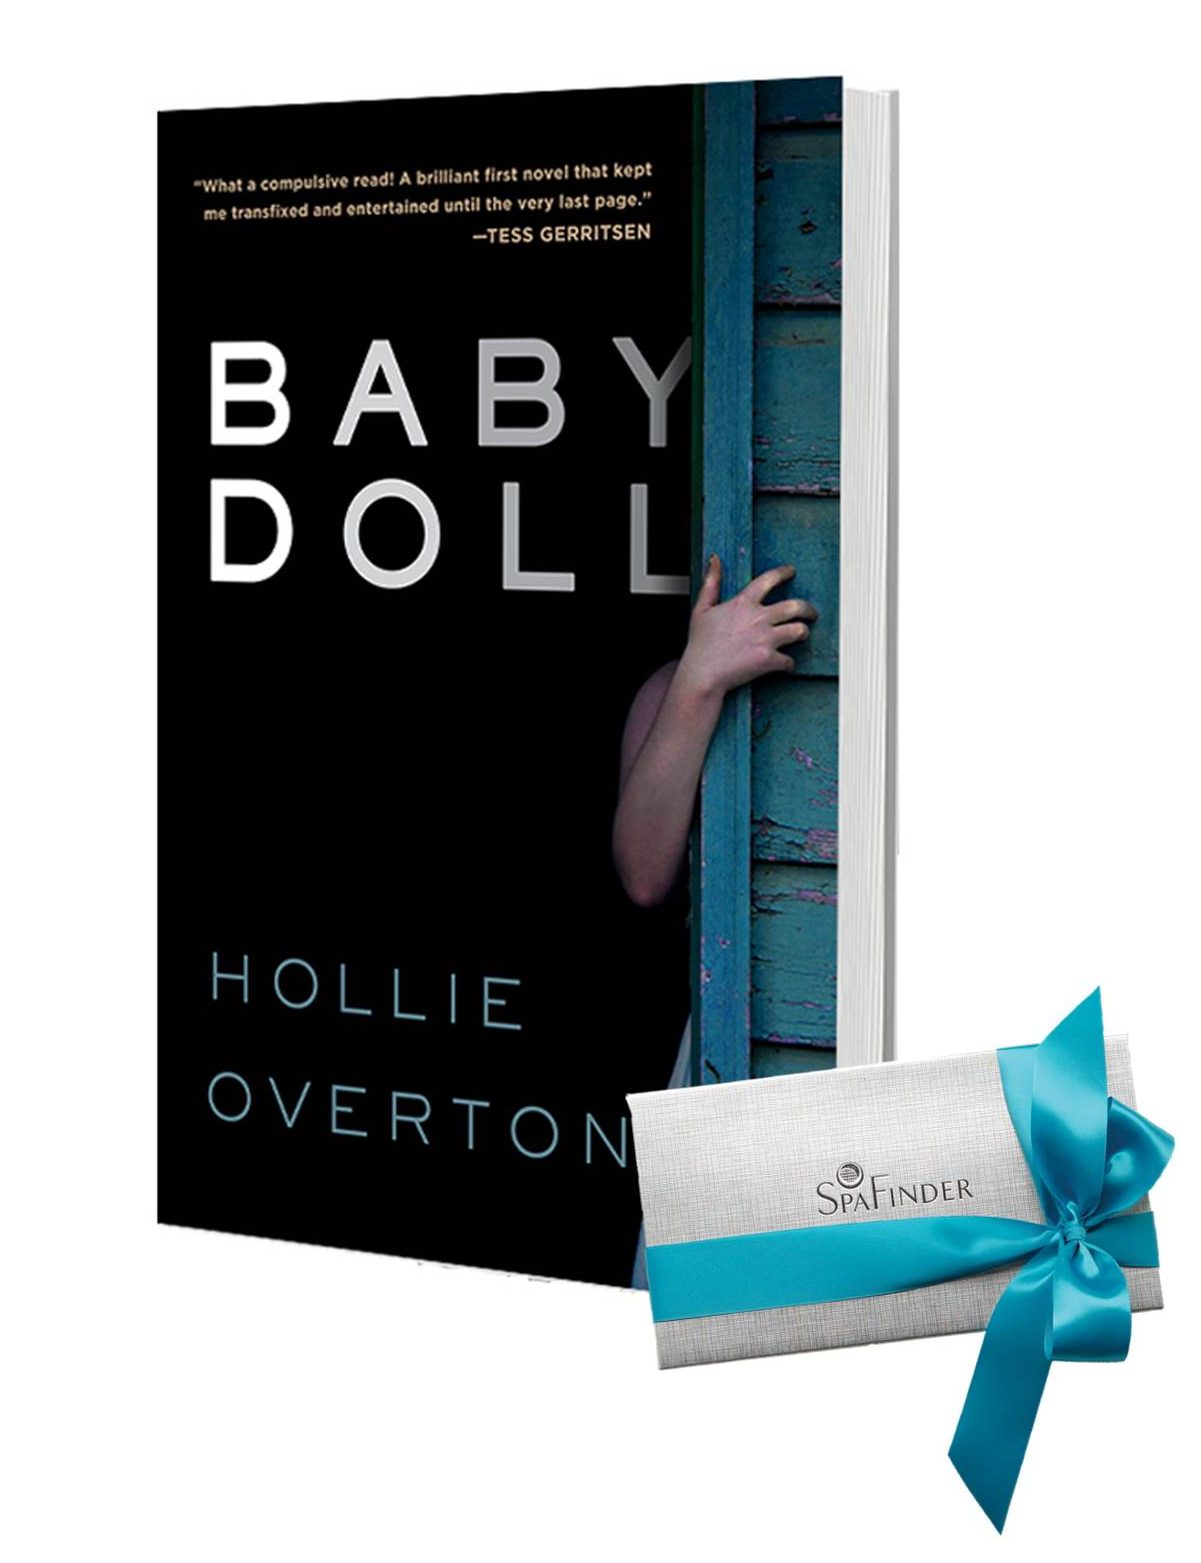 #BabyDollBook #Books #Giveaway #ad